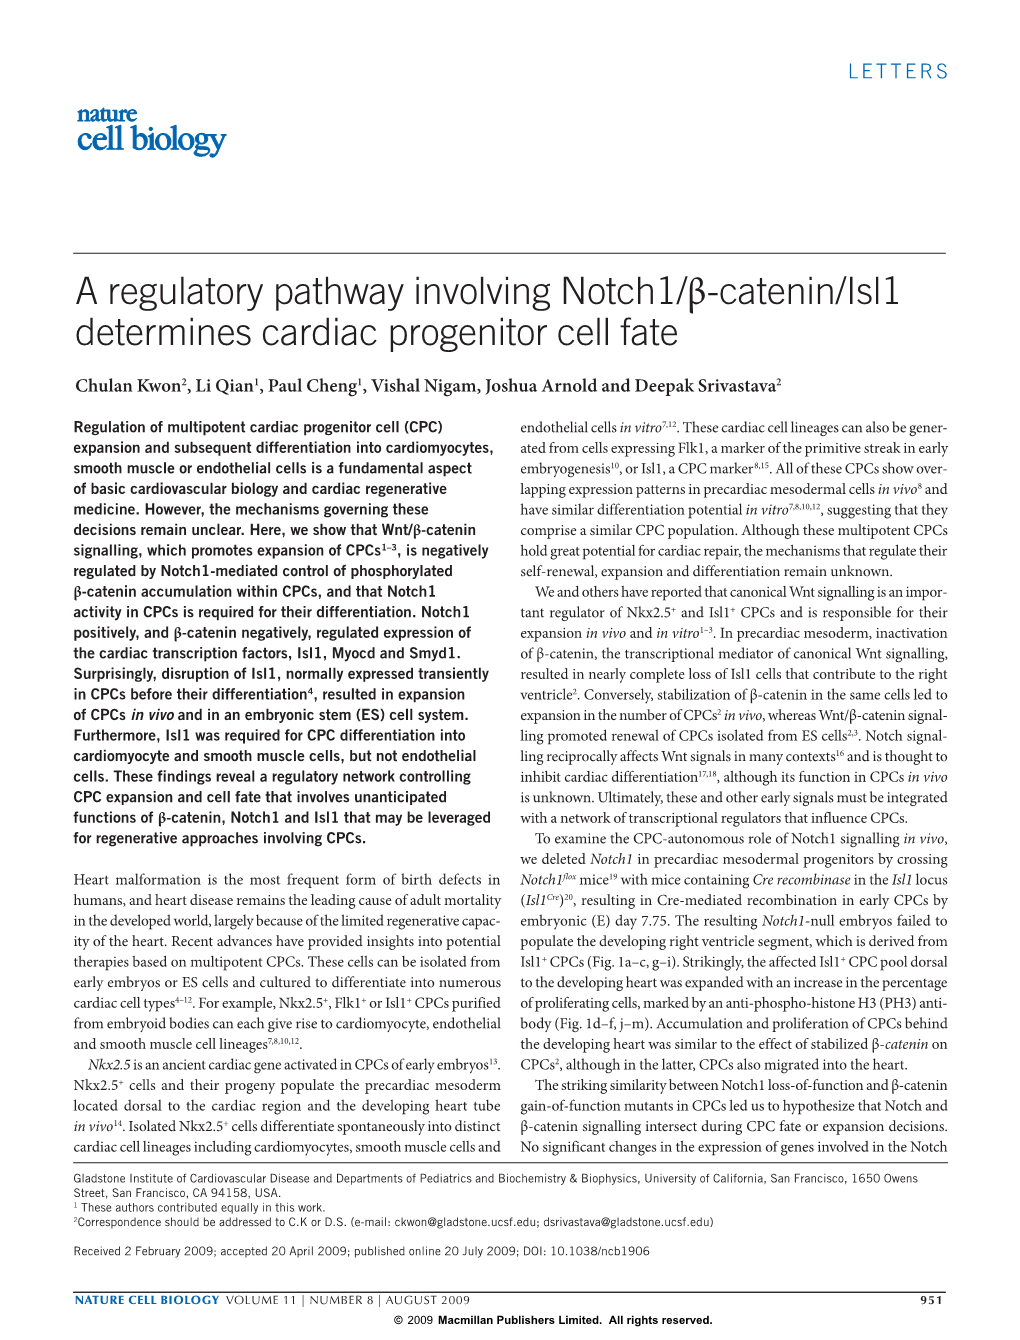 A Regulatory Pathway Involving Notch1/Β-Catenin/Isl1 Determines Cardiac Progenitor Cell Fate